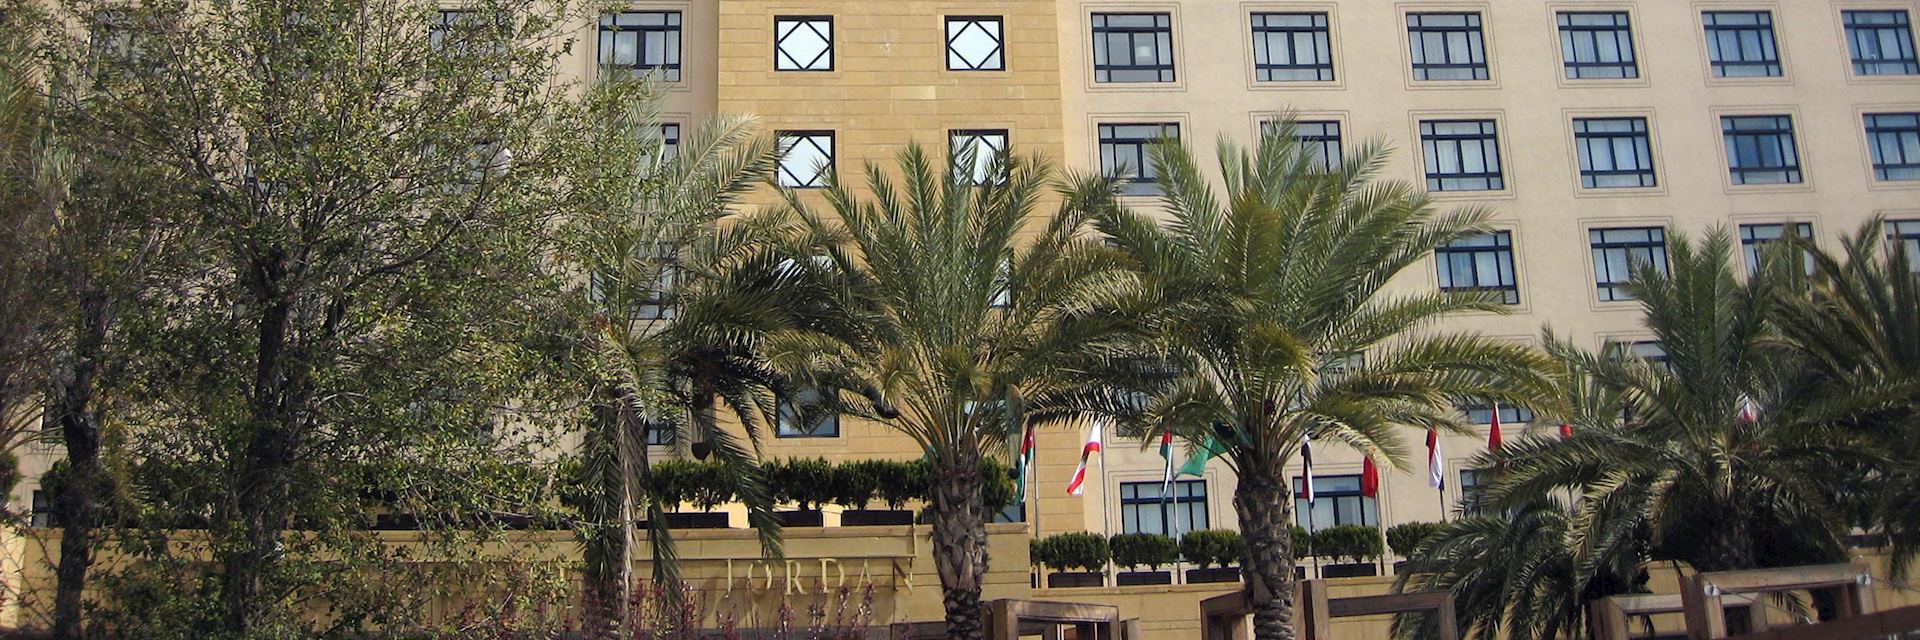 The InterContinental Jordan Hotel, Amman